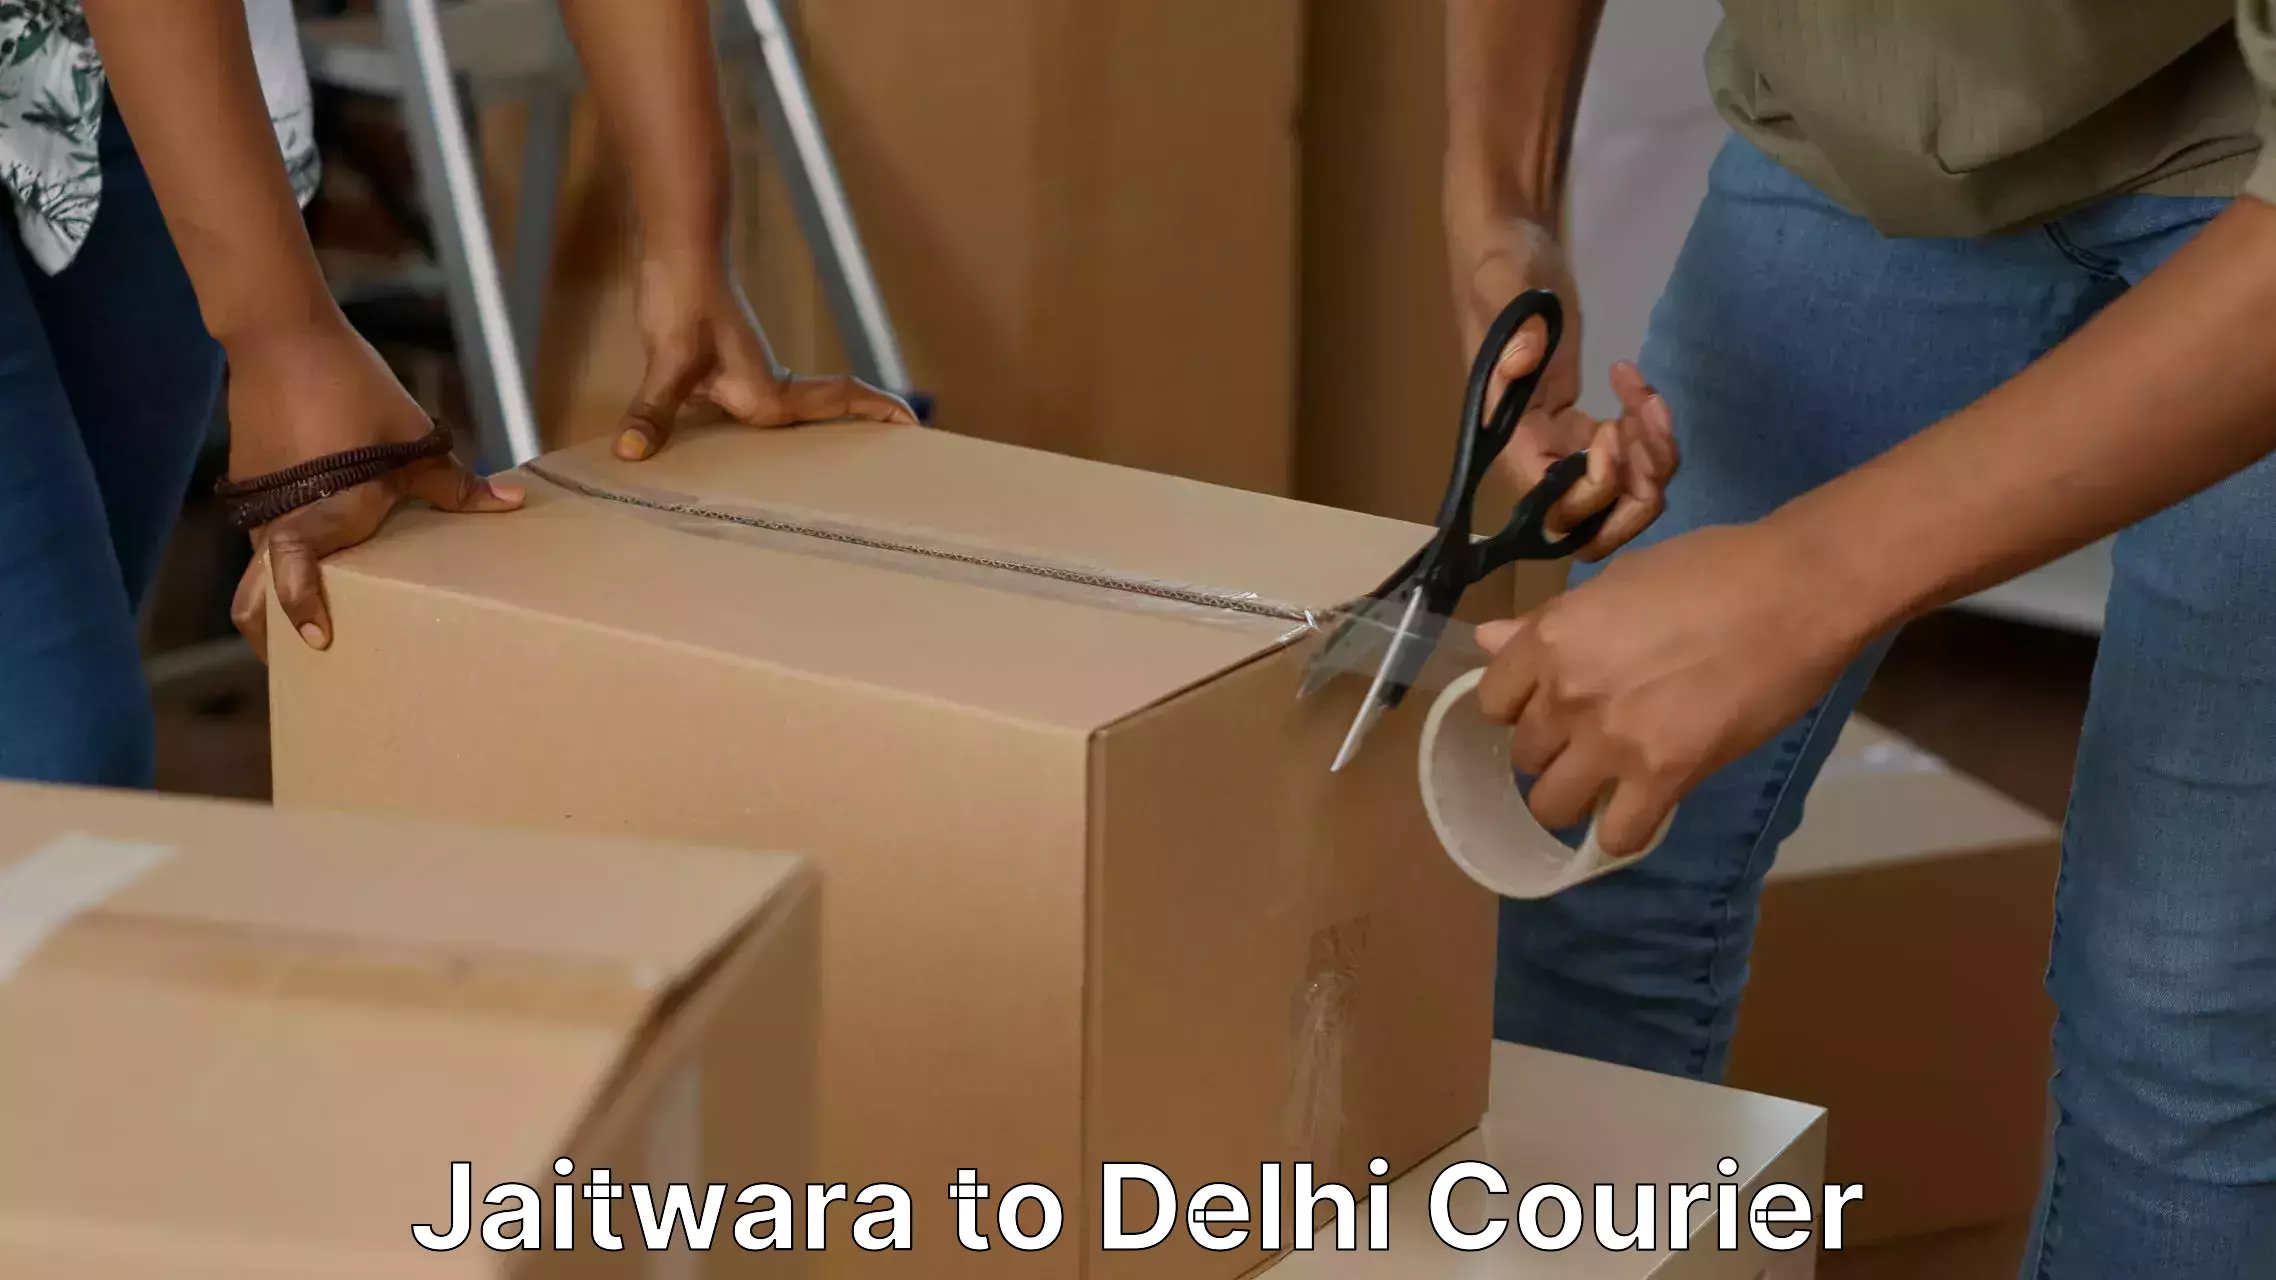 Professional moving company Jaitwara to Burari